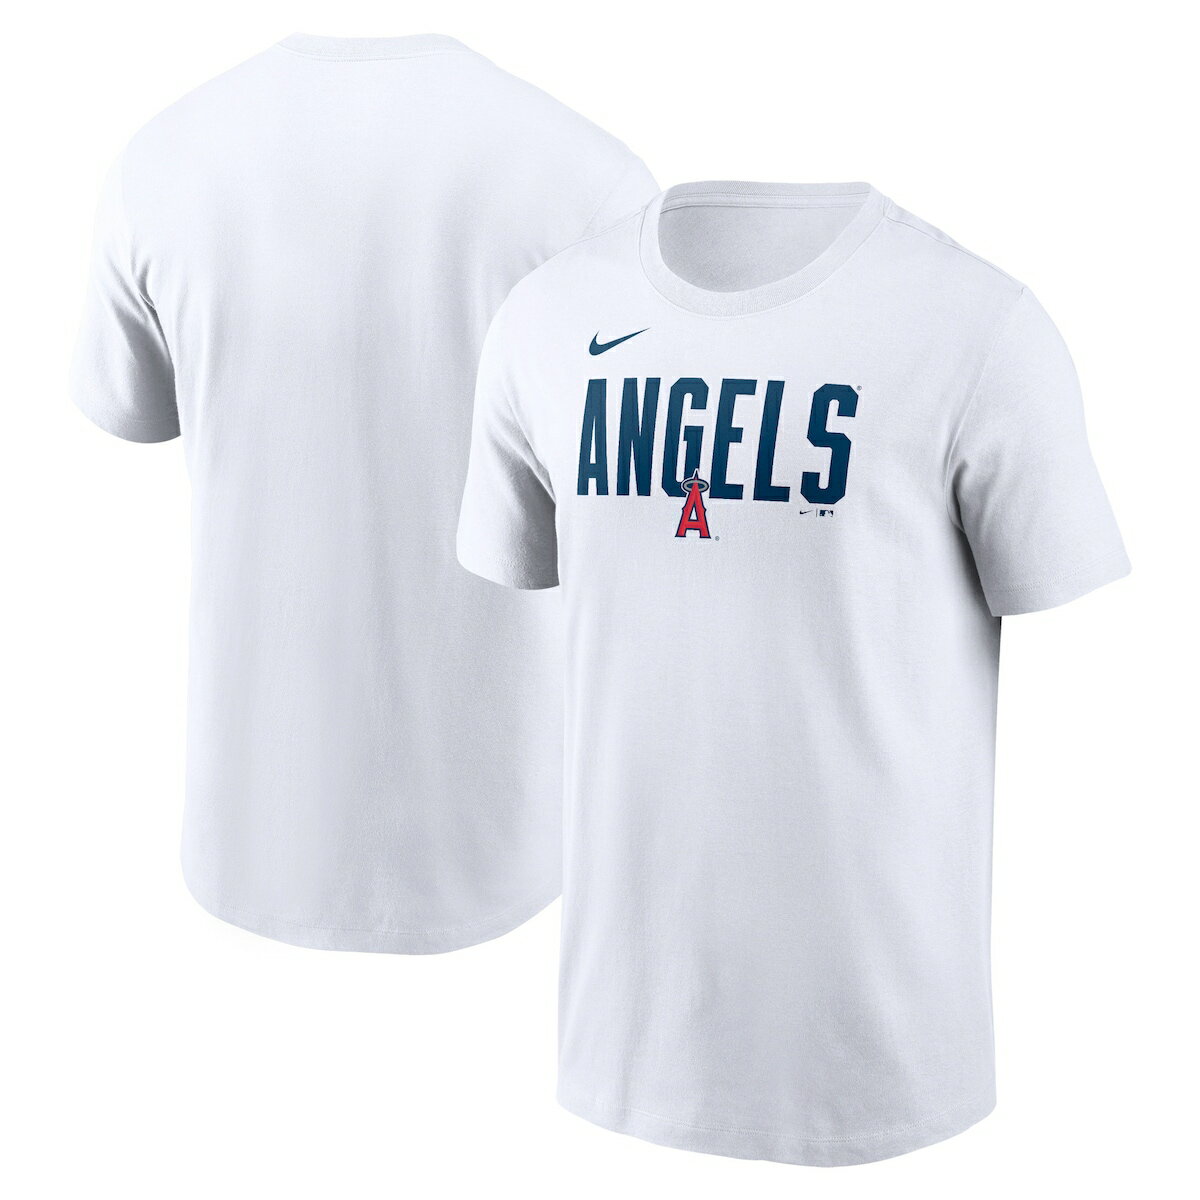 MLB エンゼルス Tシャツ Nike ナイキ メンズ ホワイト (Men's Nike Home Team Bracket Cotton Tee SP24)